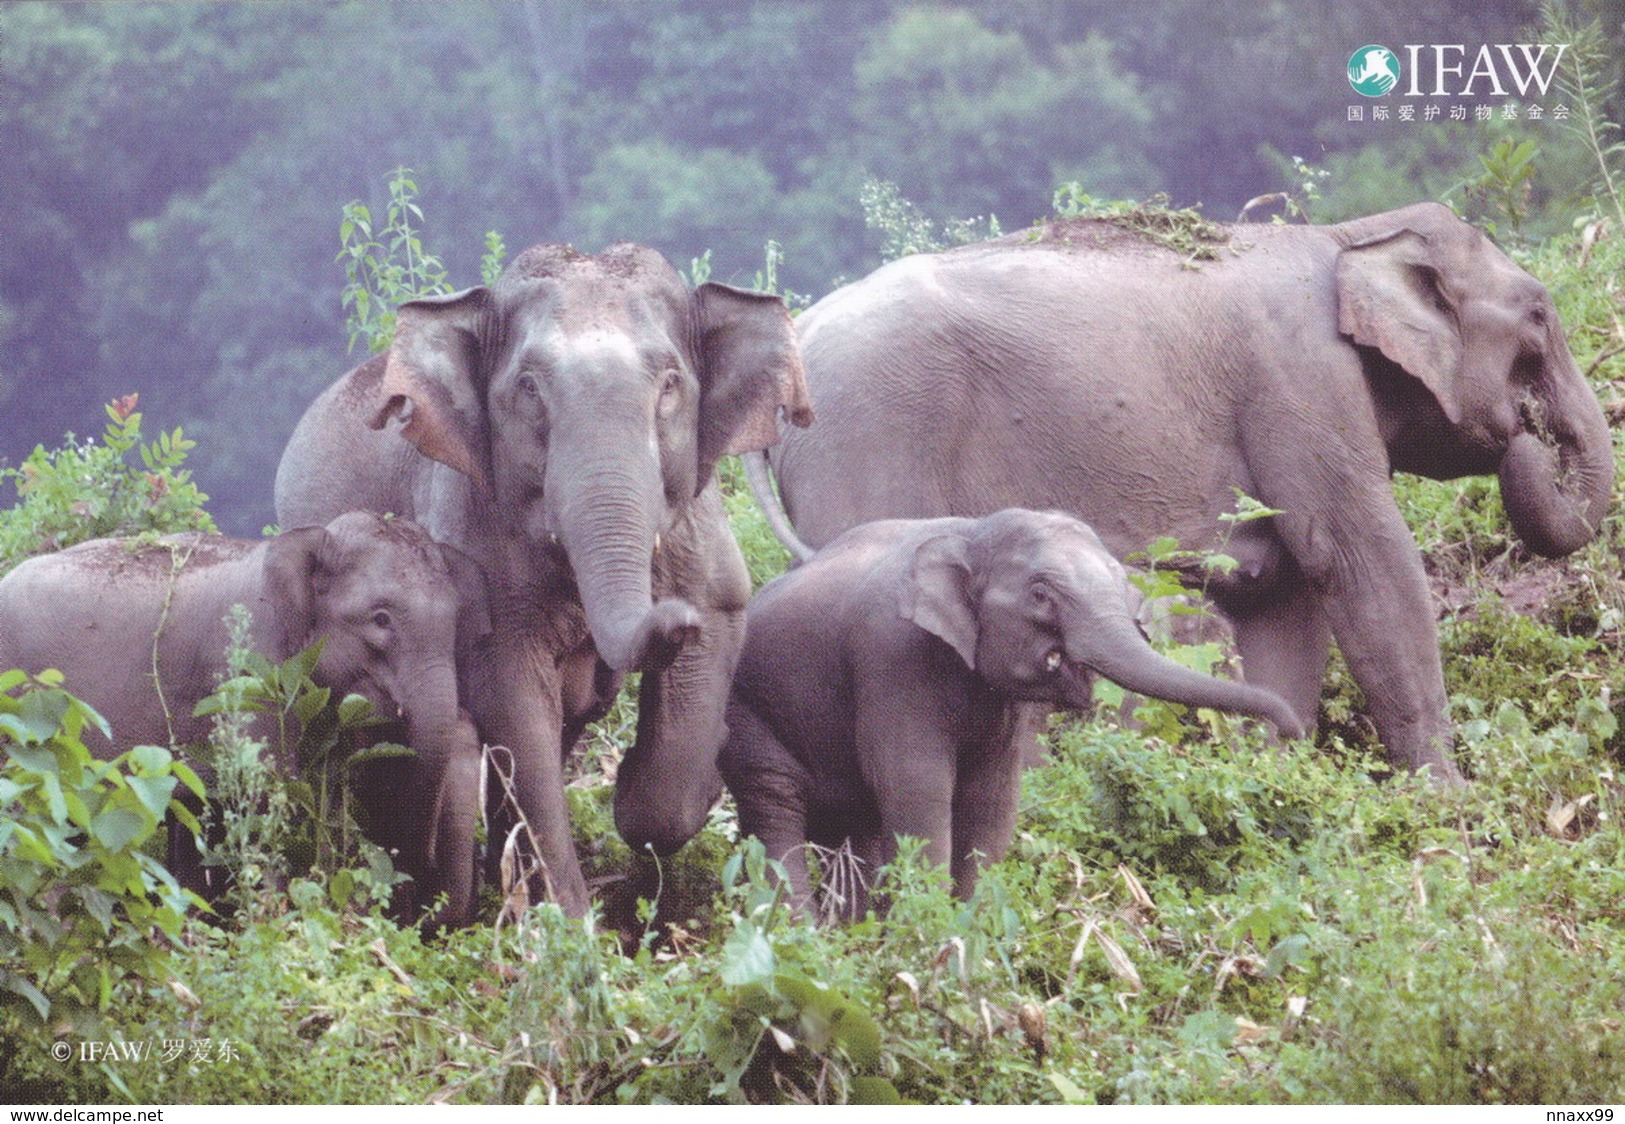 China - Asian Elephant, IFAW China Postcard - Elephants